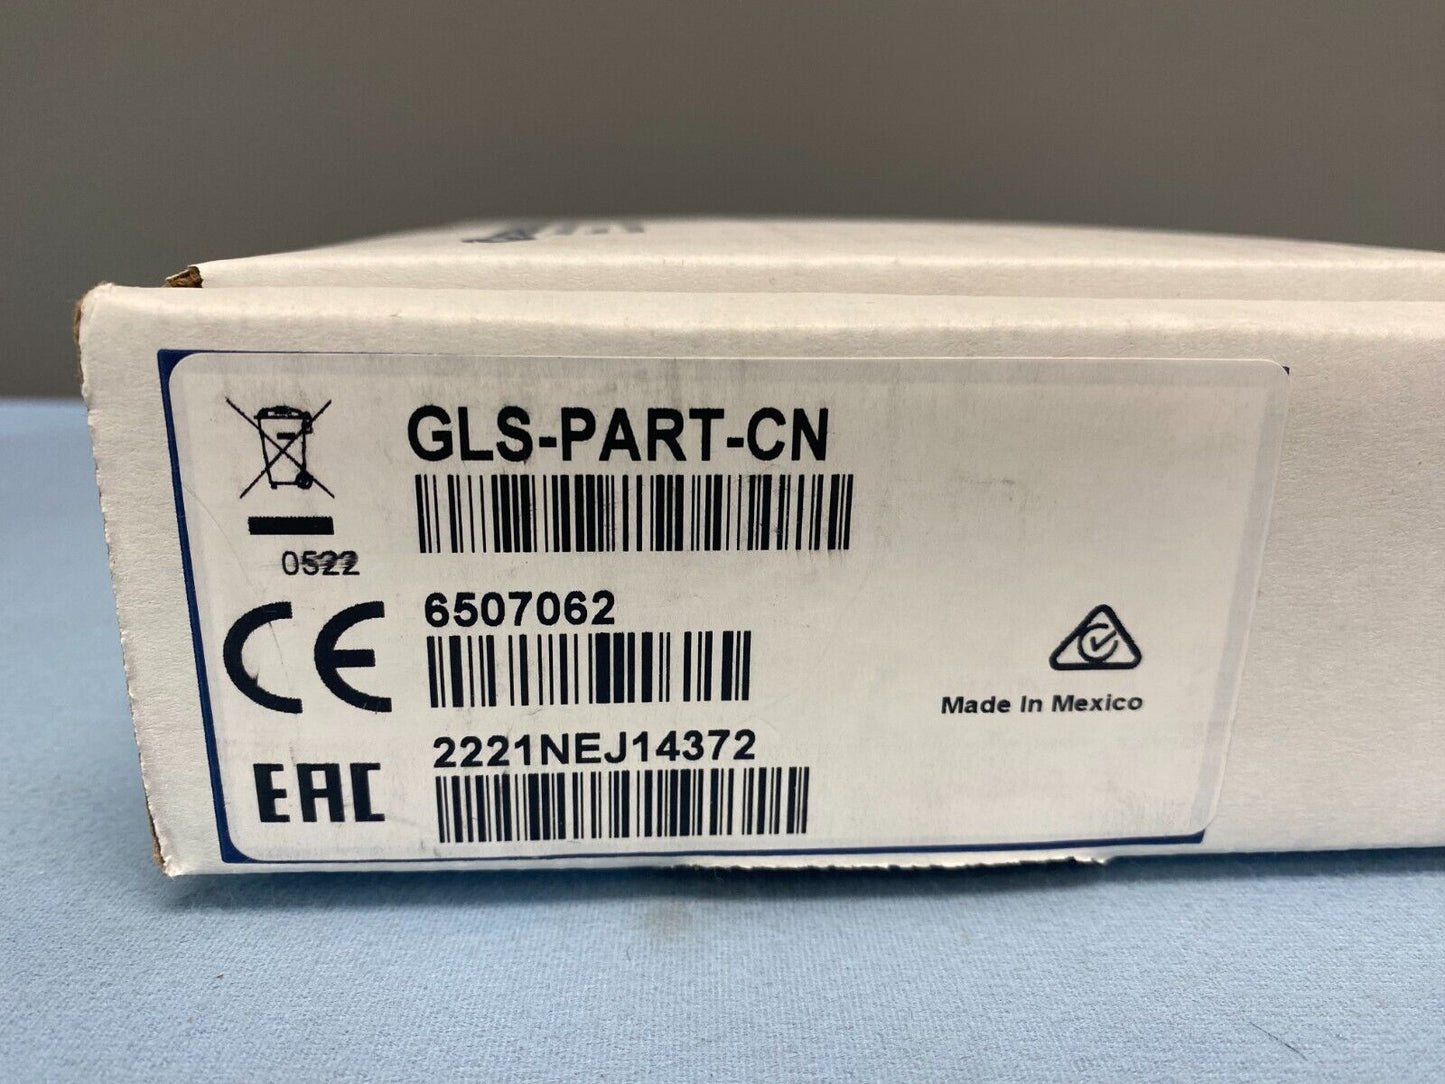 Crestron GLS-PART-CN  Surface-mount Cresnet Partition Sensor 6507062